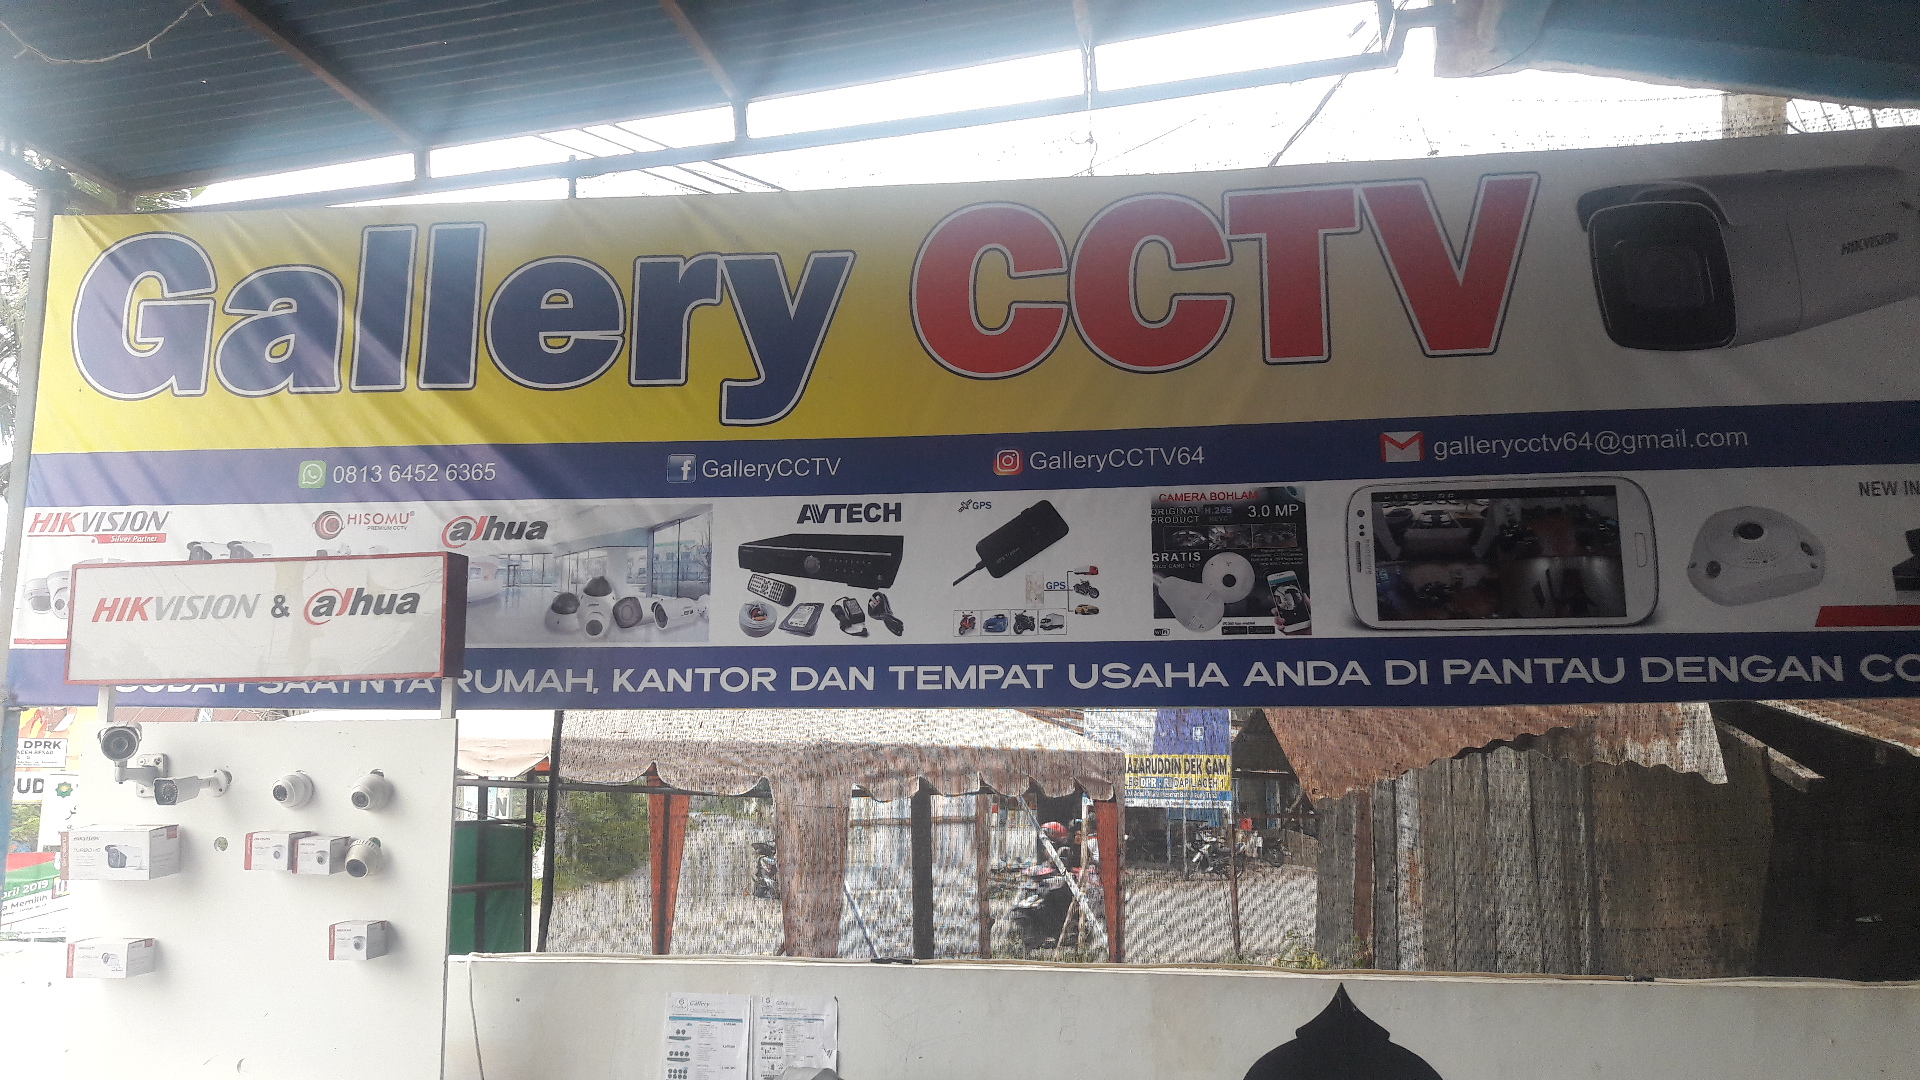 Gambar Gallery Cctv